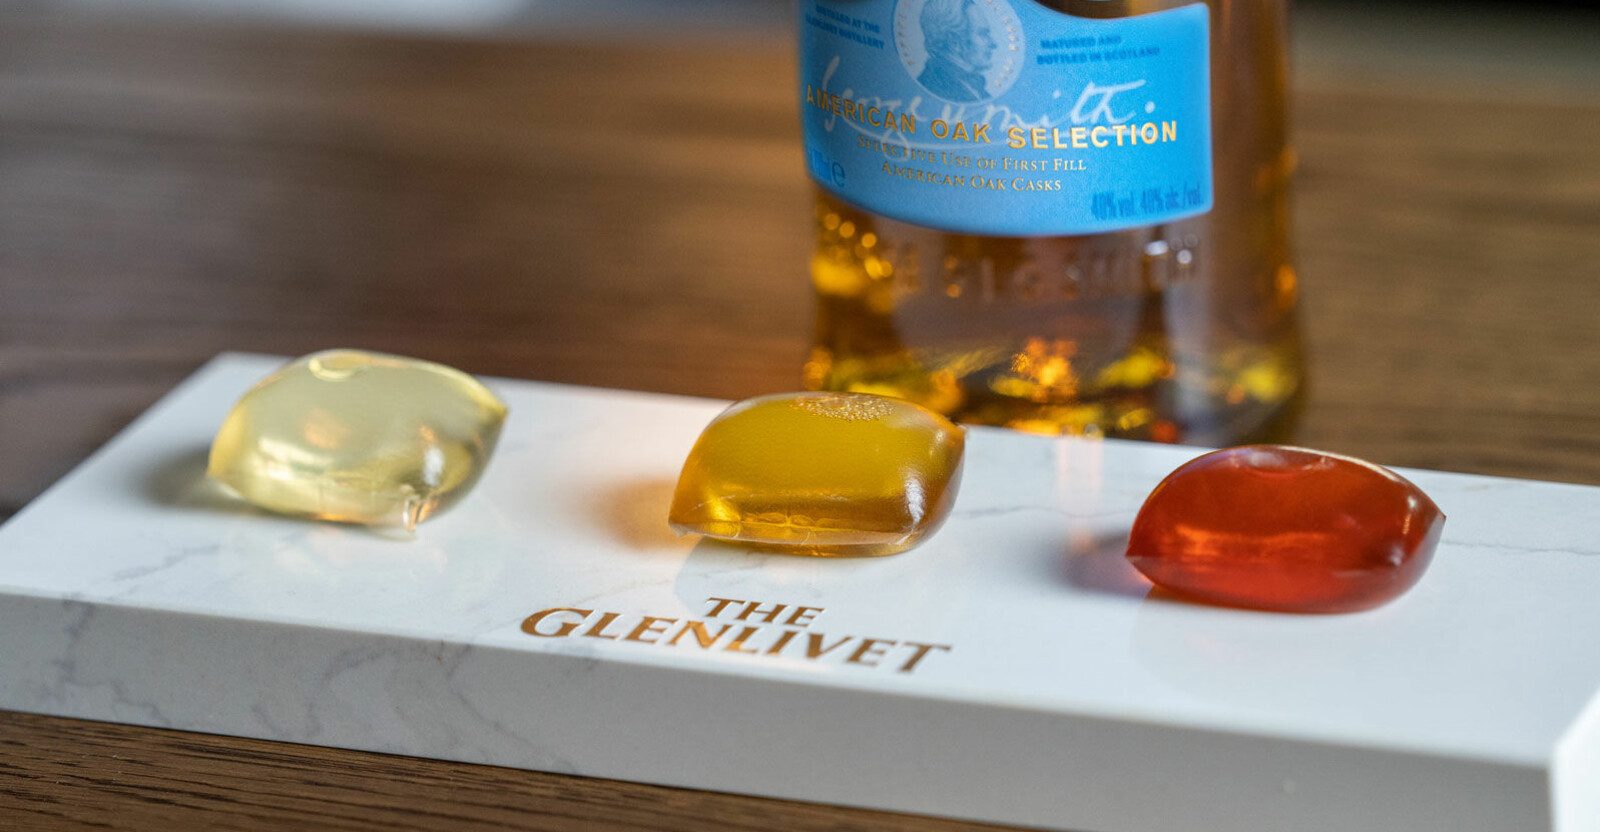 <b>SHOT I SJØGRESS:</b> I forbindelse med London Cocktail Week i oktober hadde whisky-selskapet The Glenlivet laget whisky i spiselige kapsler.